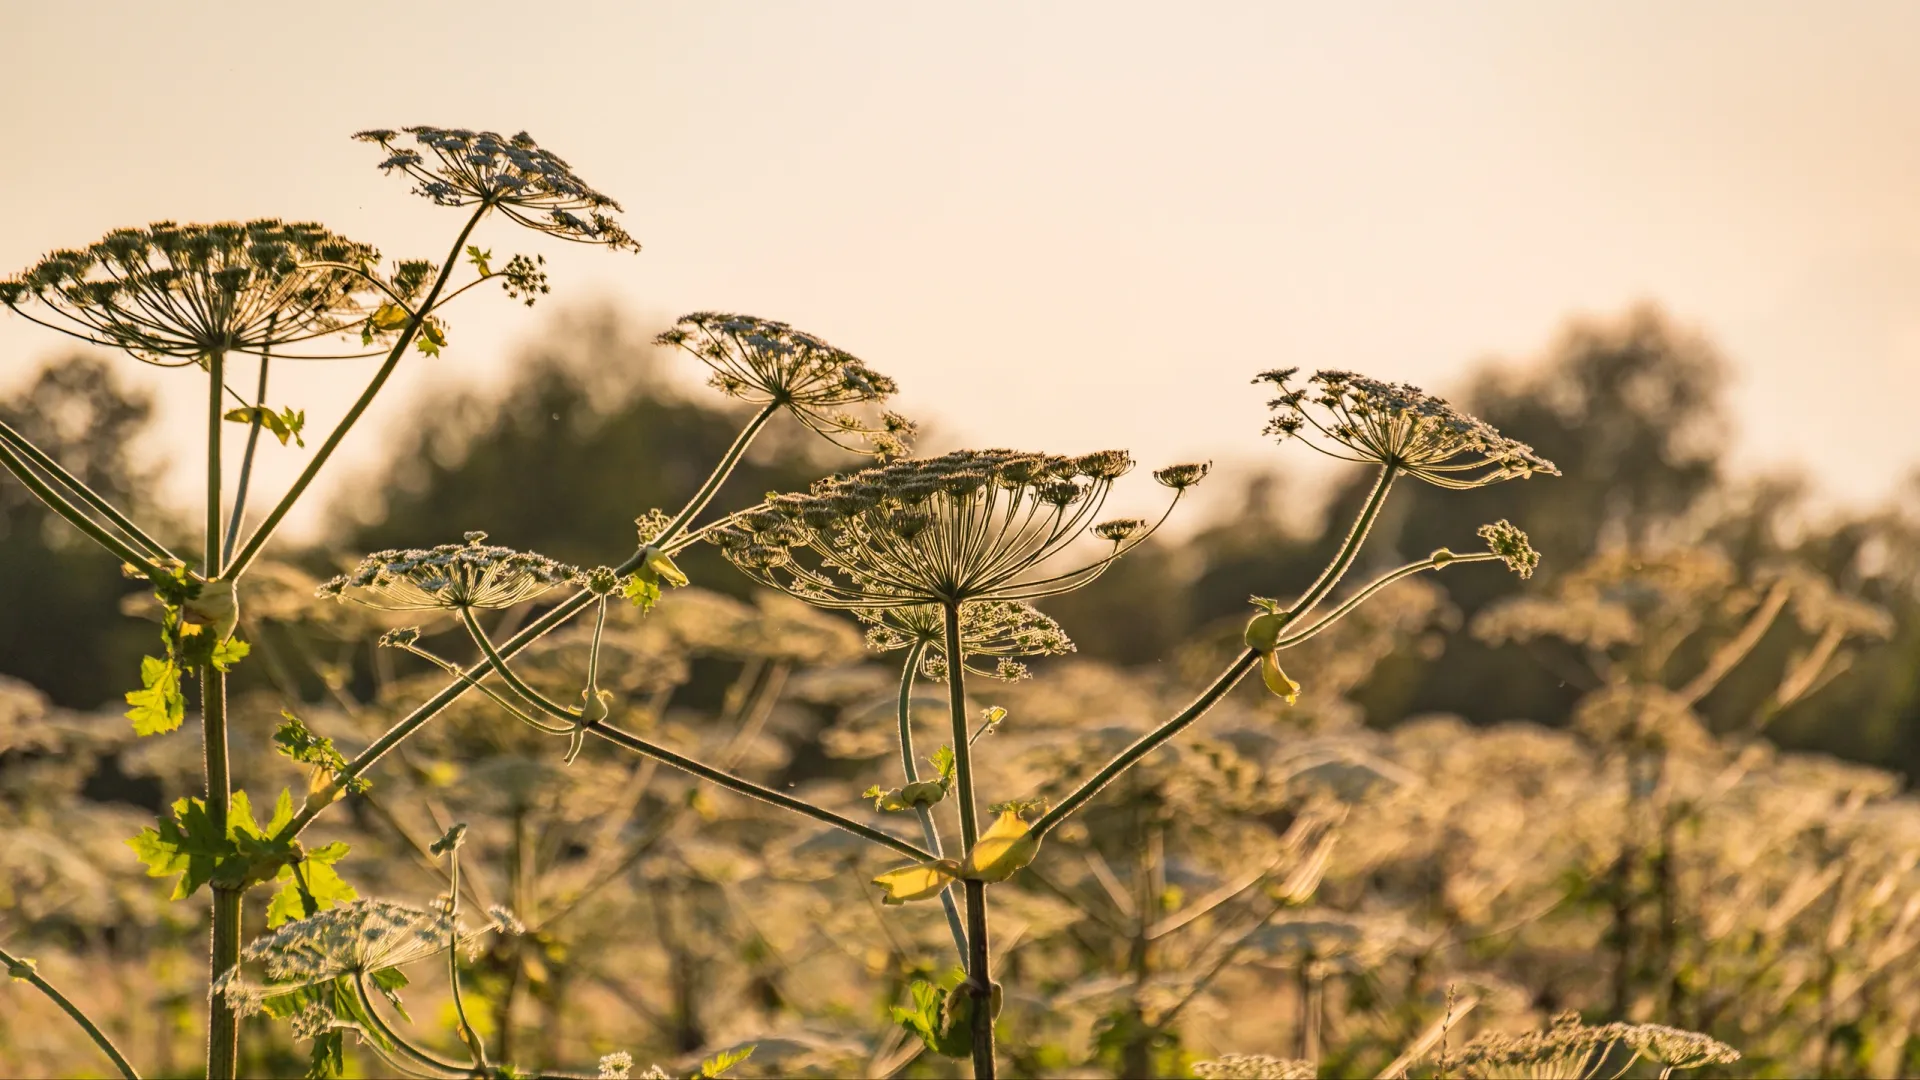 Борщевик опасен для человека с весны до осени. Фото: Lyudmila Lucienne / Shutterstock / Fotodom